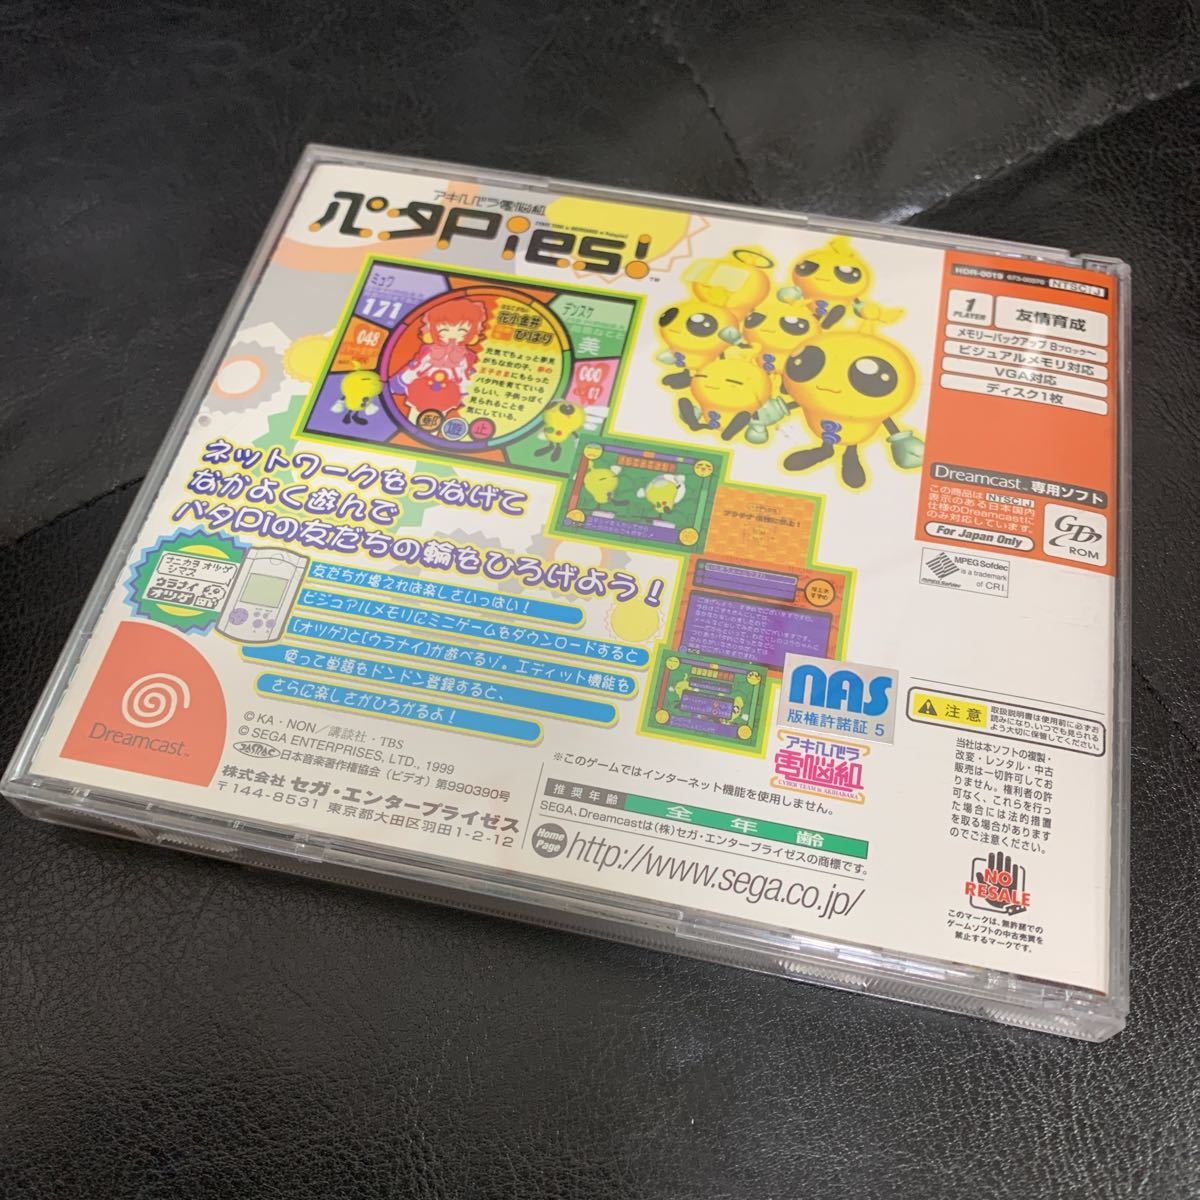  Akihabara Dennou Gumi pataPies! Dreamcast 